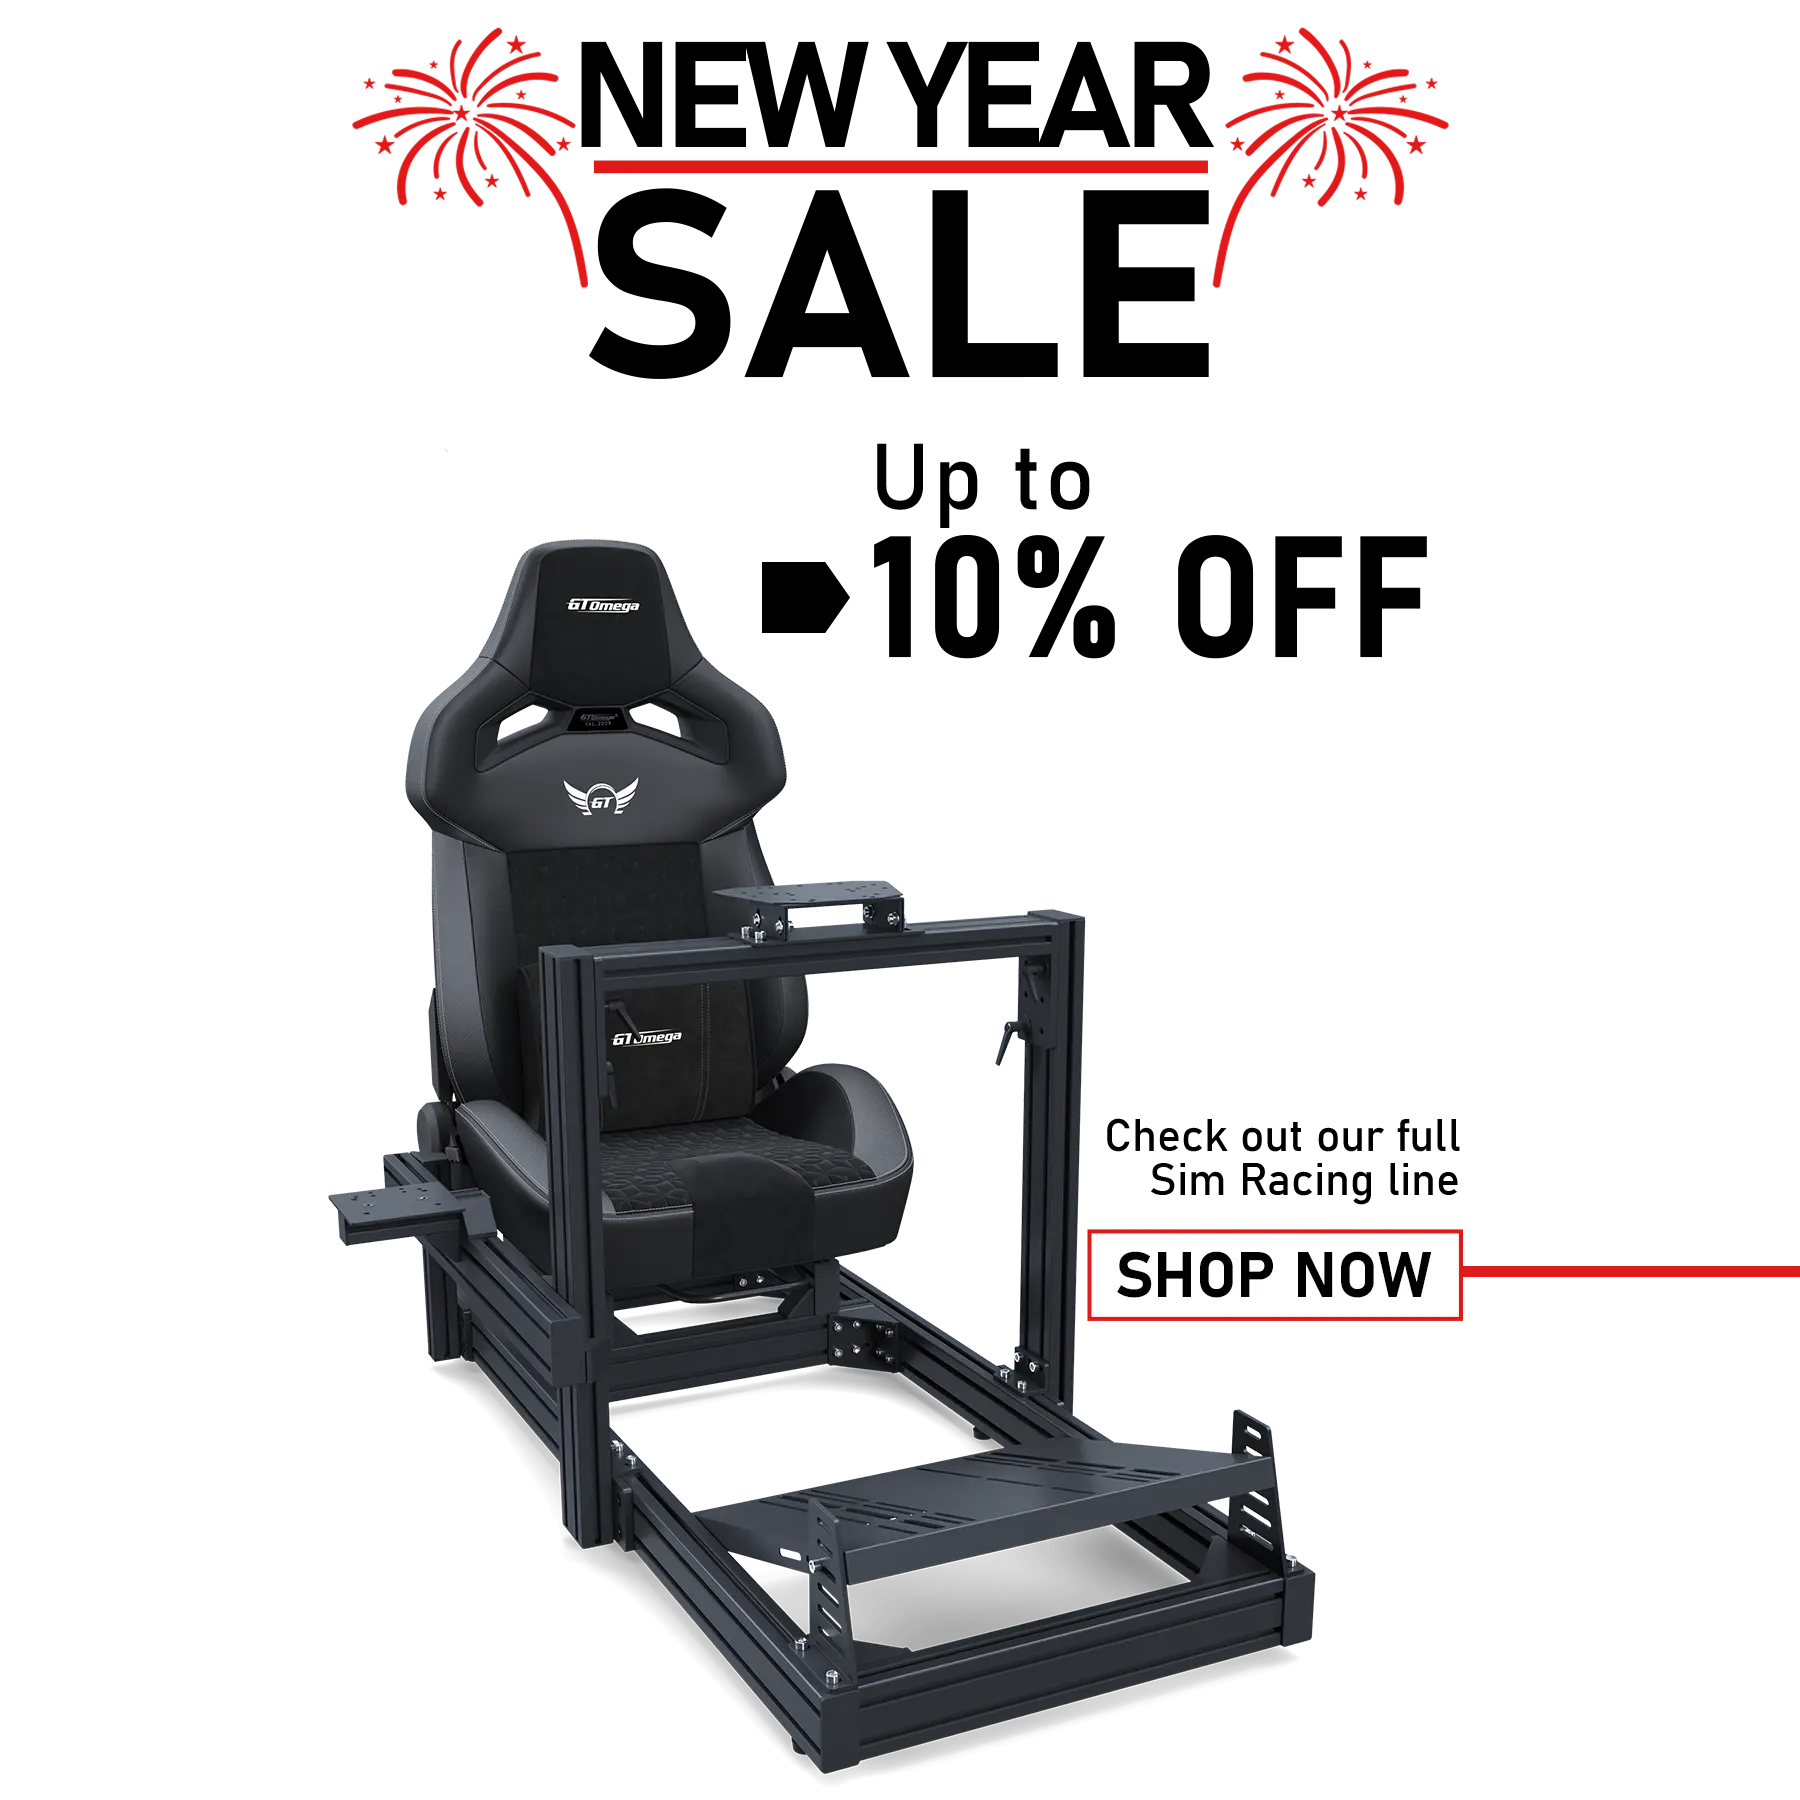 How I easily move my heavy wheel stand - furniture sliders! : r/simracing